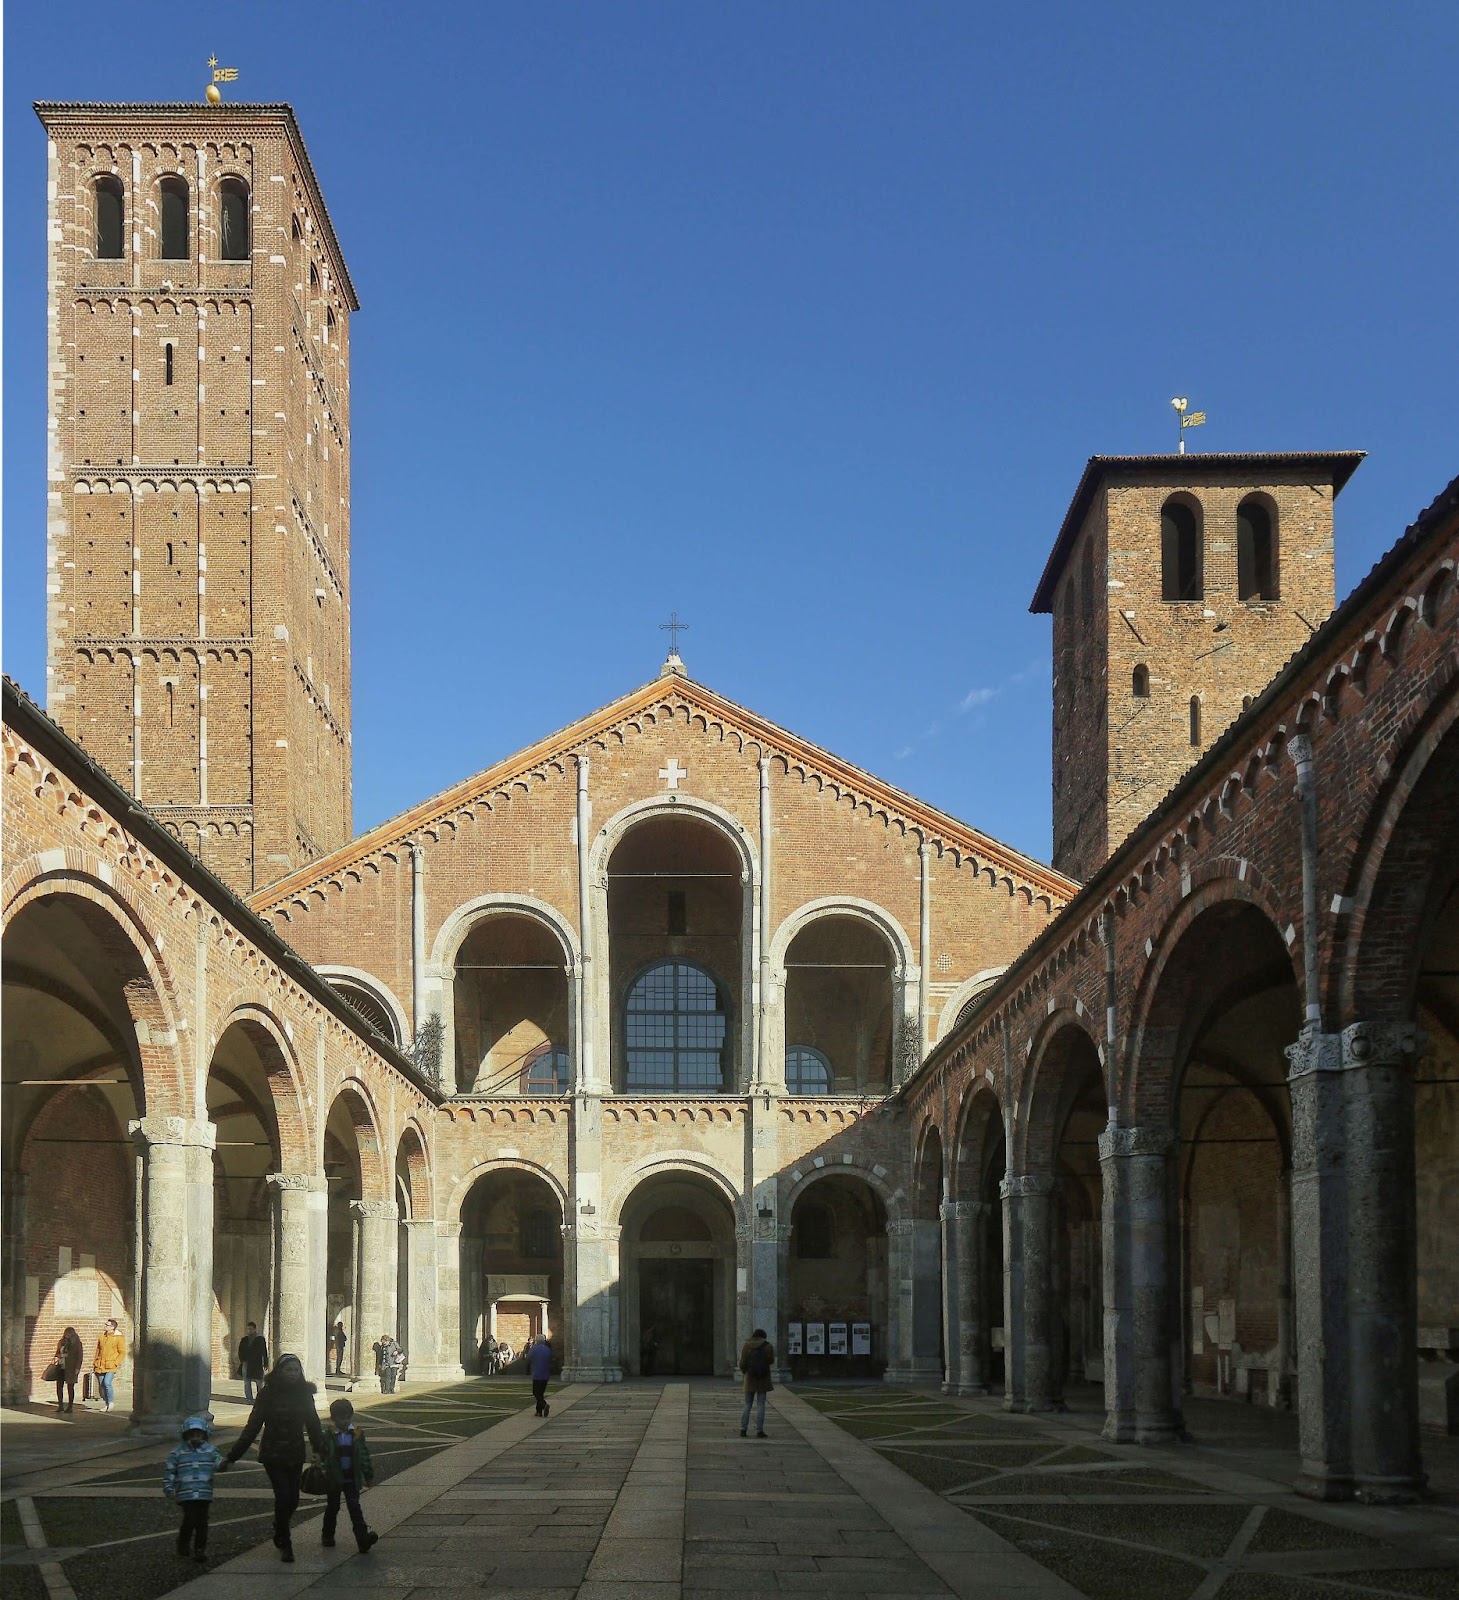 Basilica of Sant Ambrogio, most ancient basilica in Milan, 